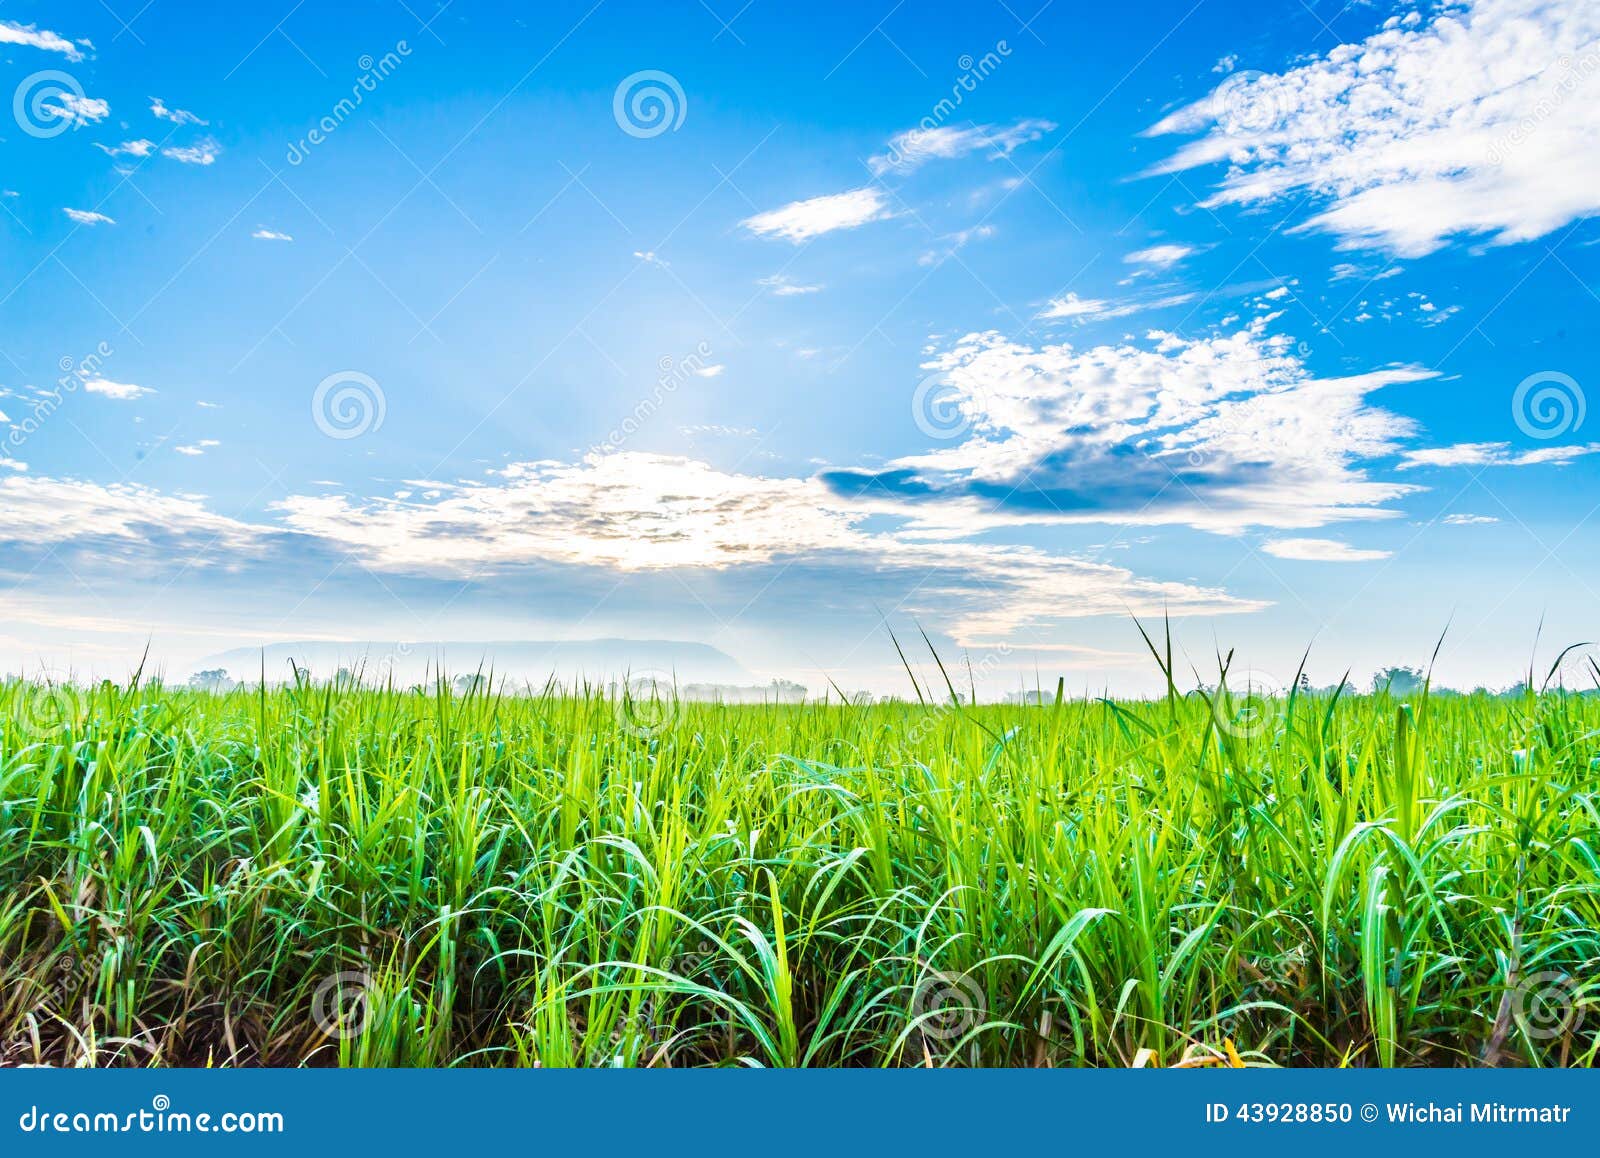 sugarcane plants grow in field